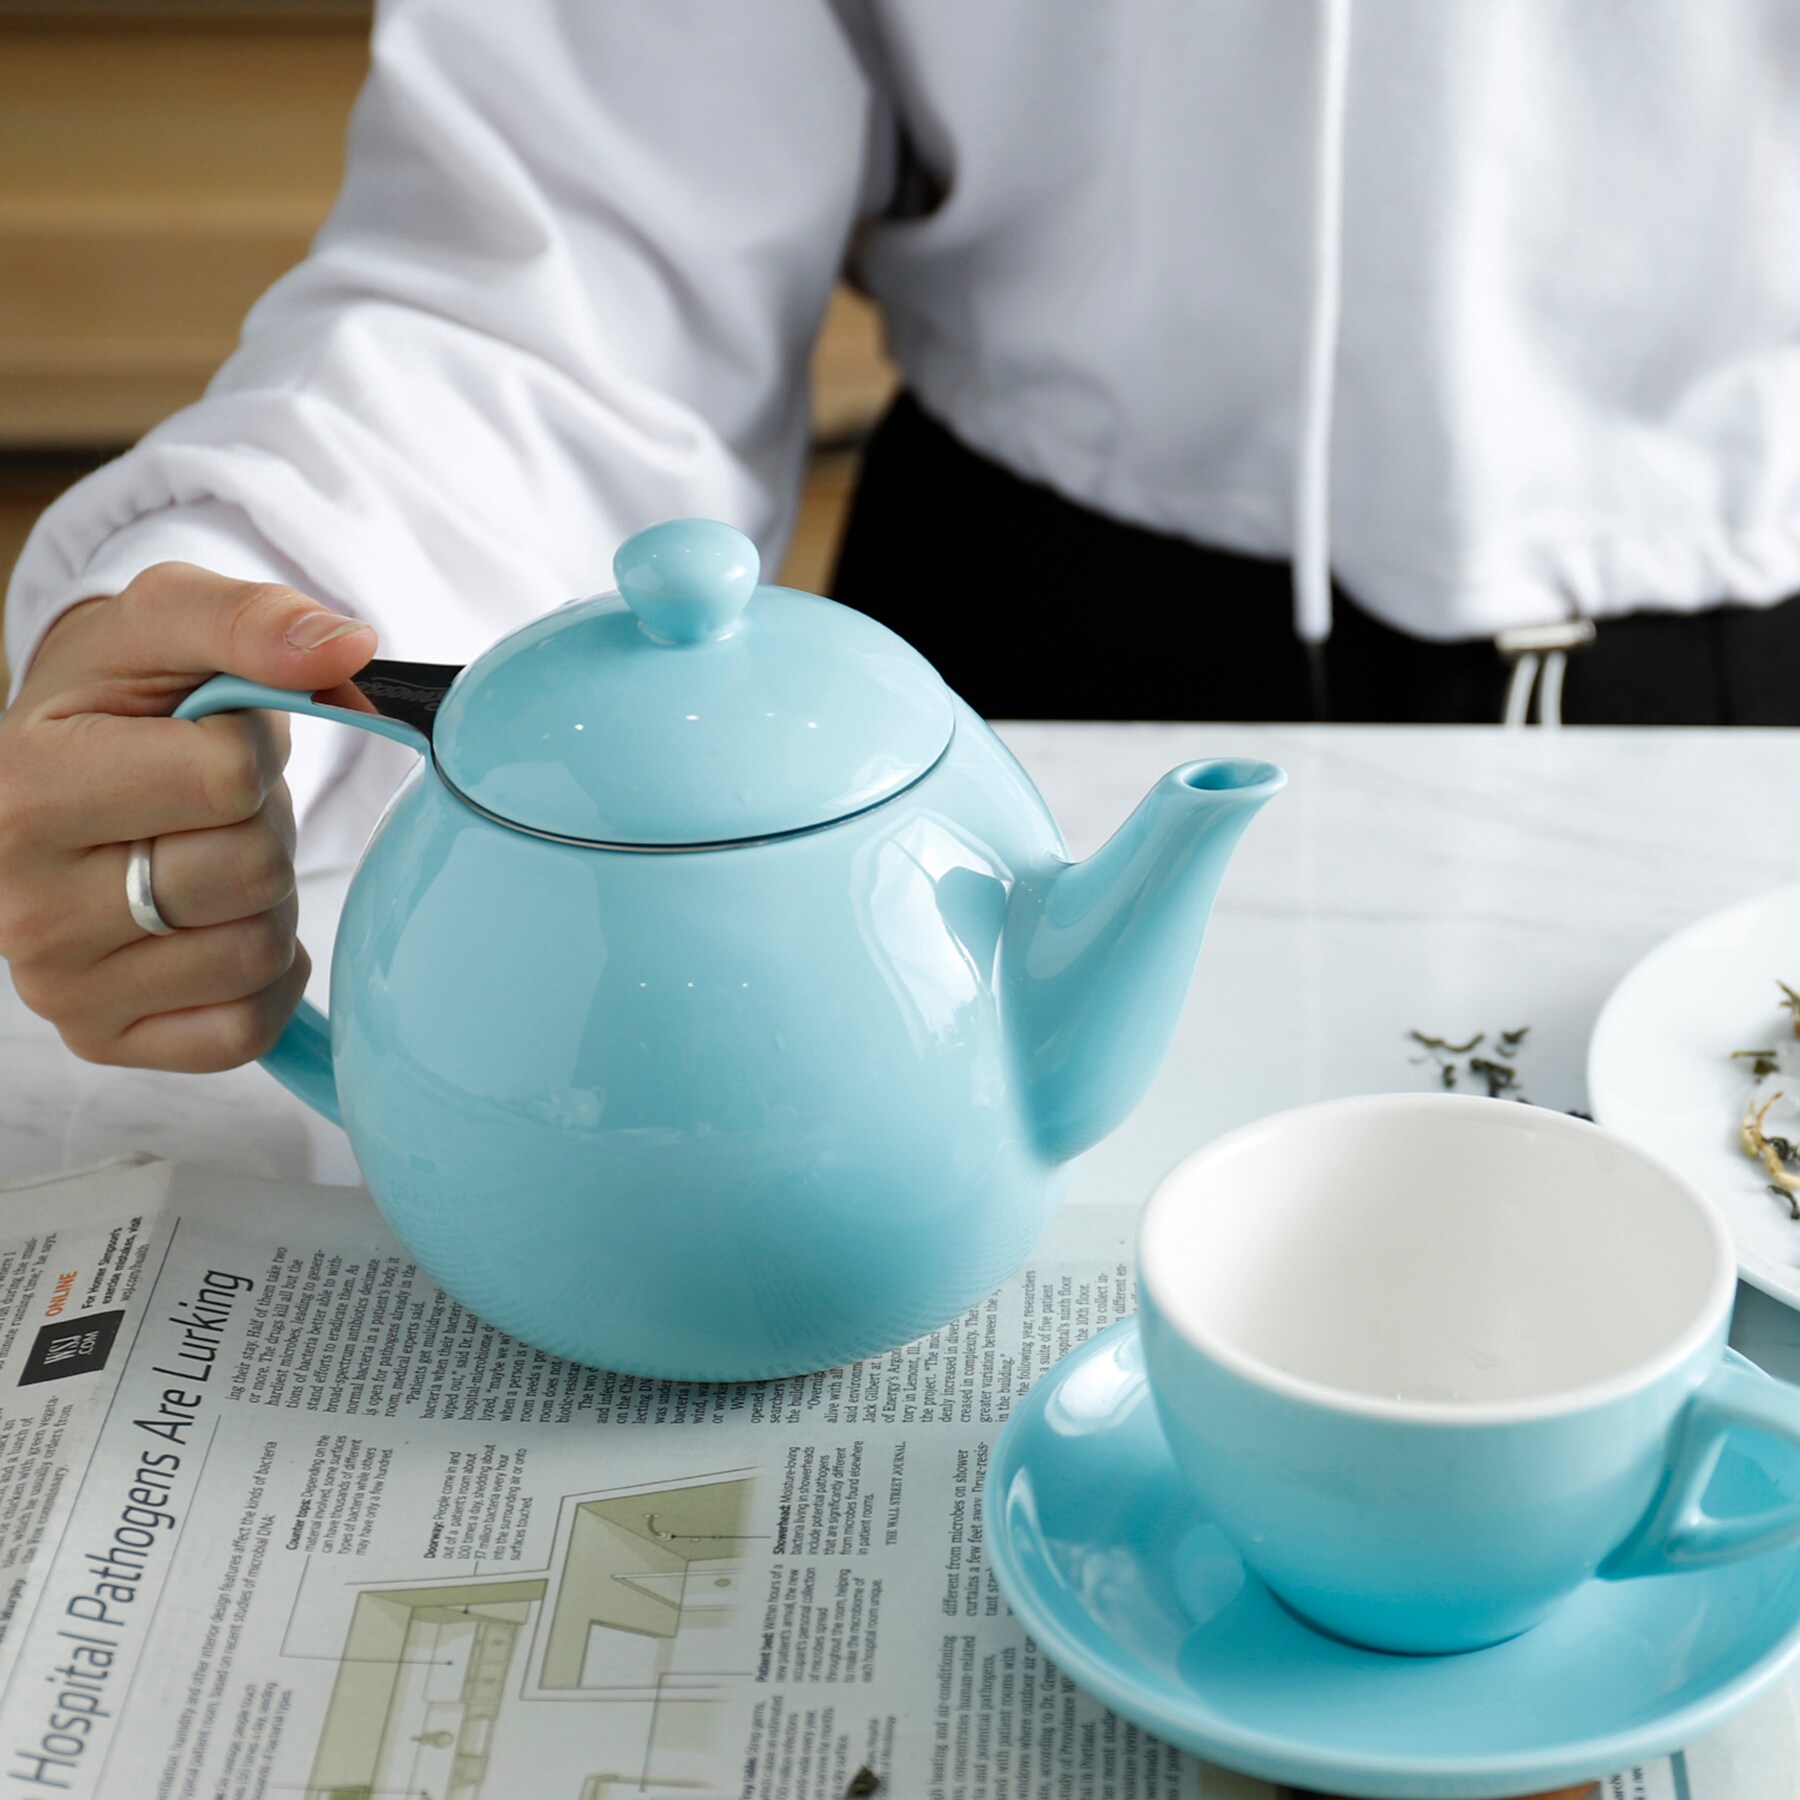 Sweese Porcelain Tea Mug with Infuser Lid, Ceramic Coffee Cup Set